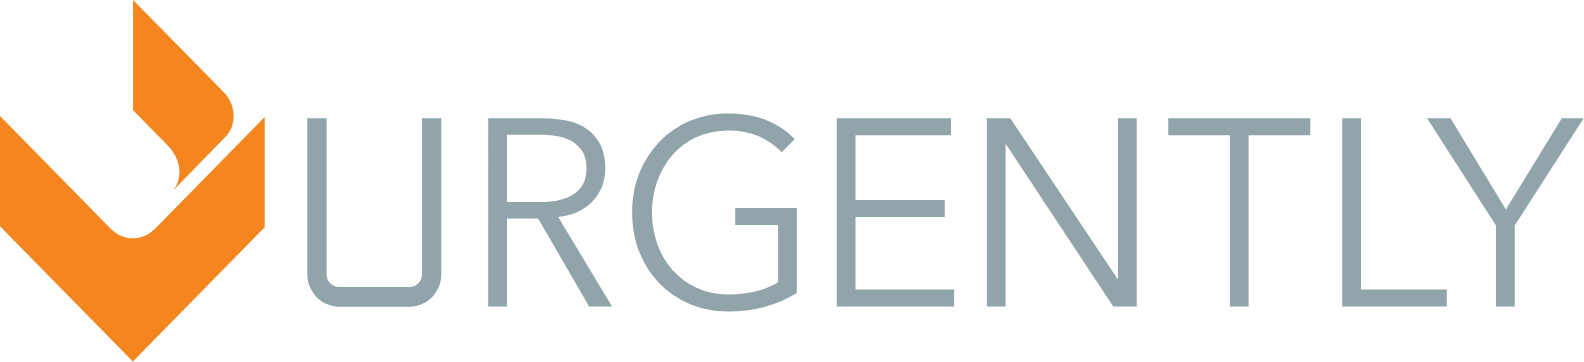 Urgent.ly Inc. logo large (transparent PNG)